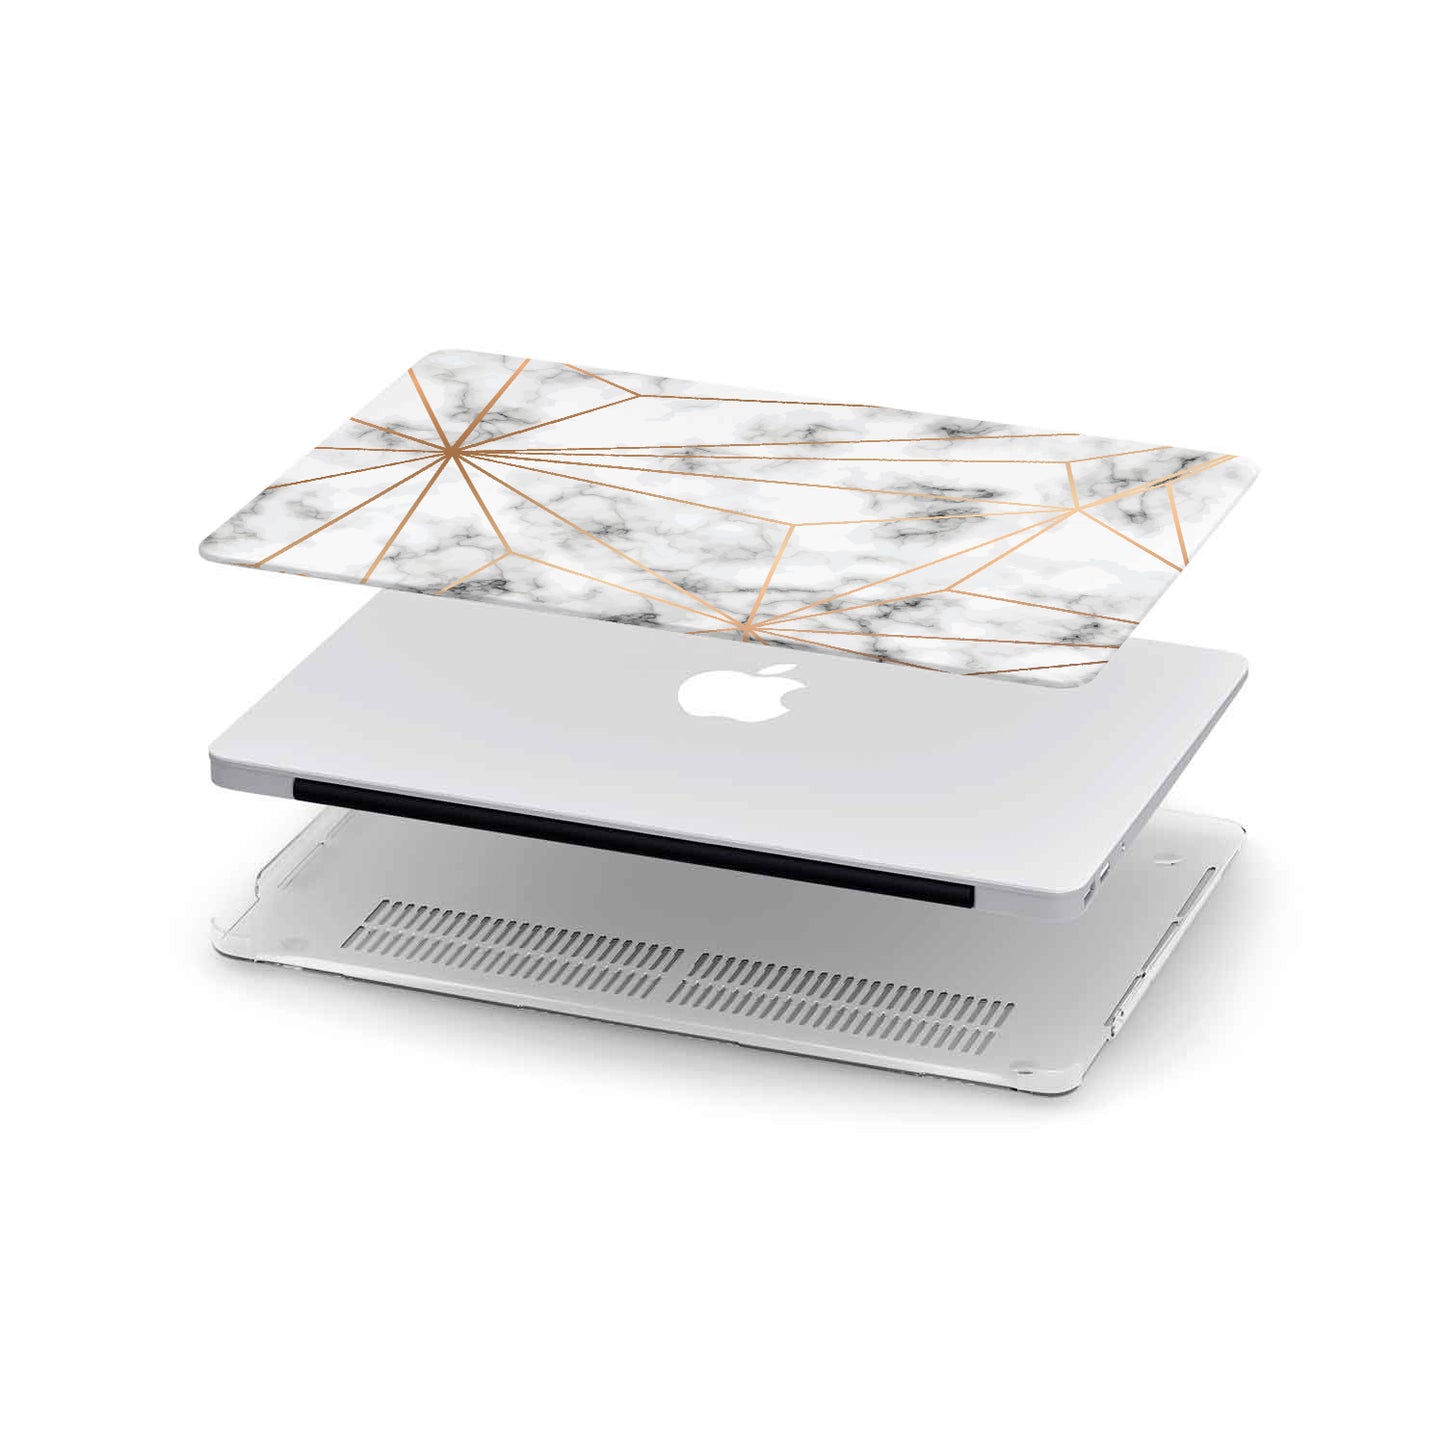 Macbook Hard Shell Case - White Marble & Geometric